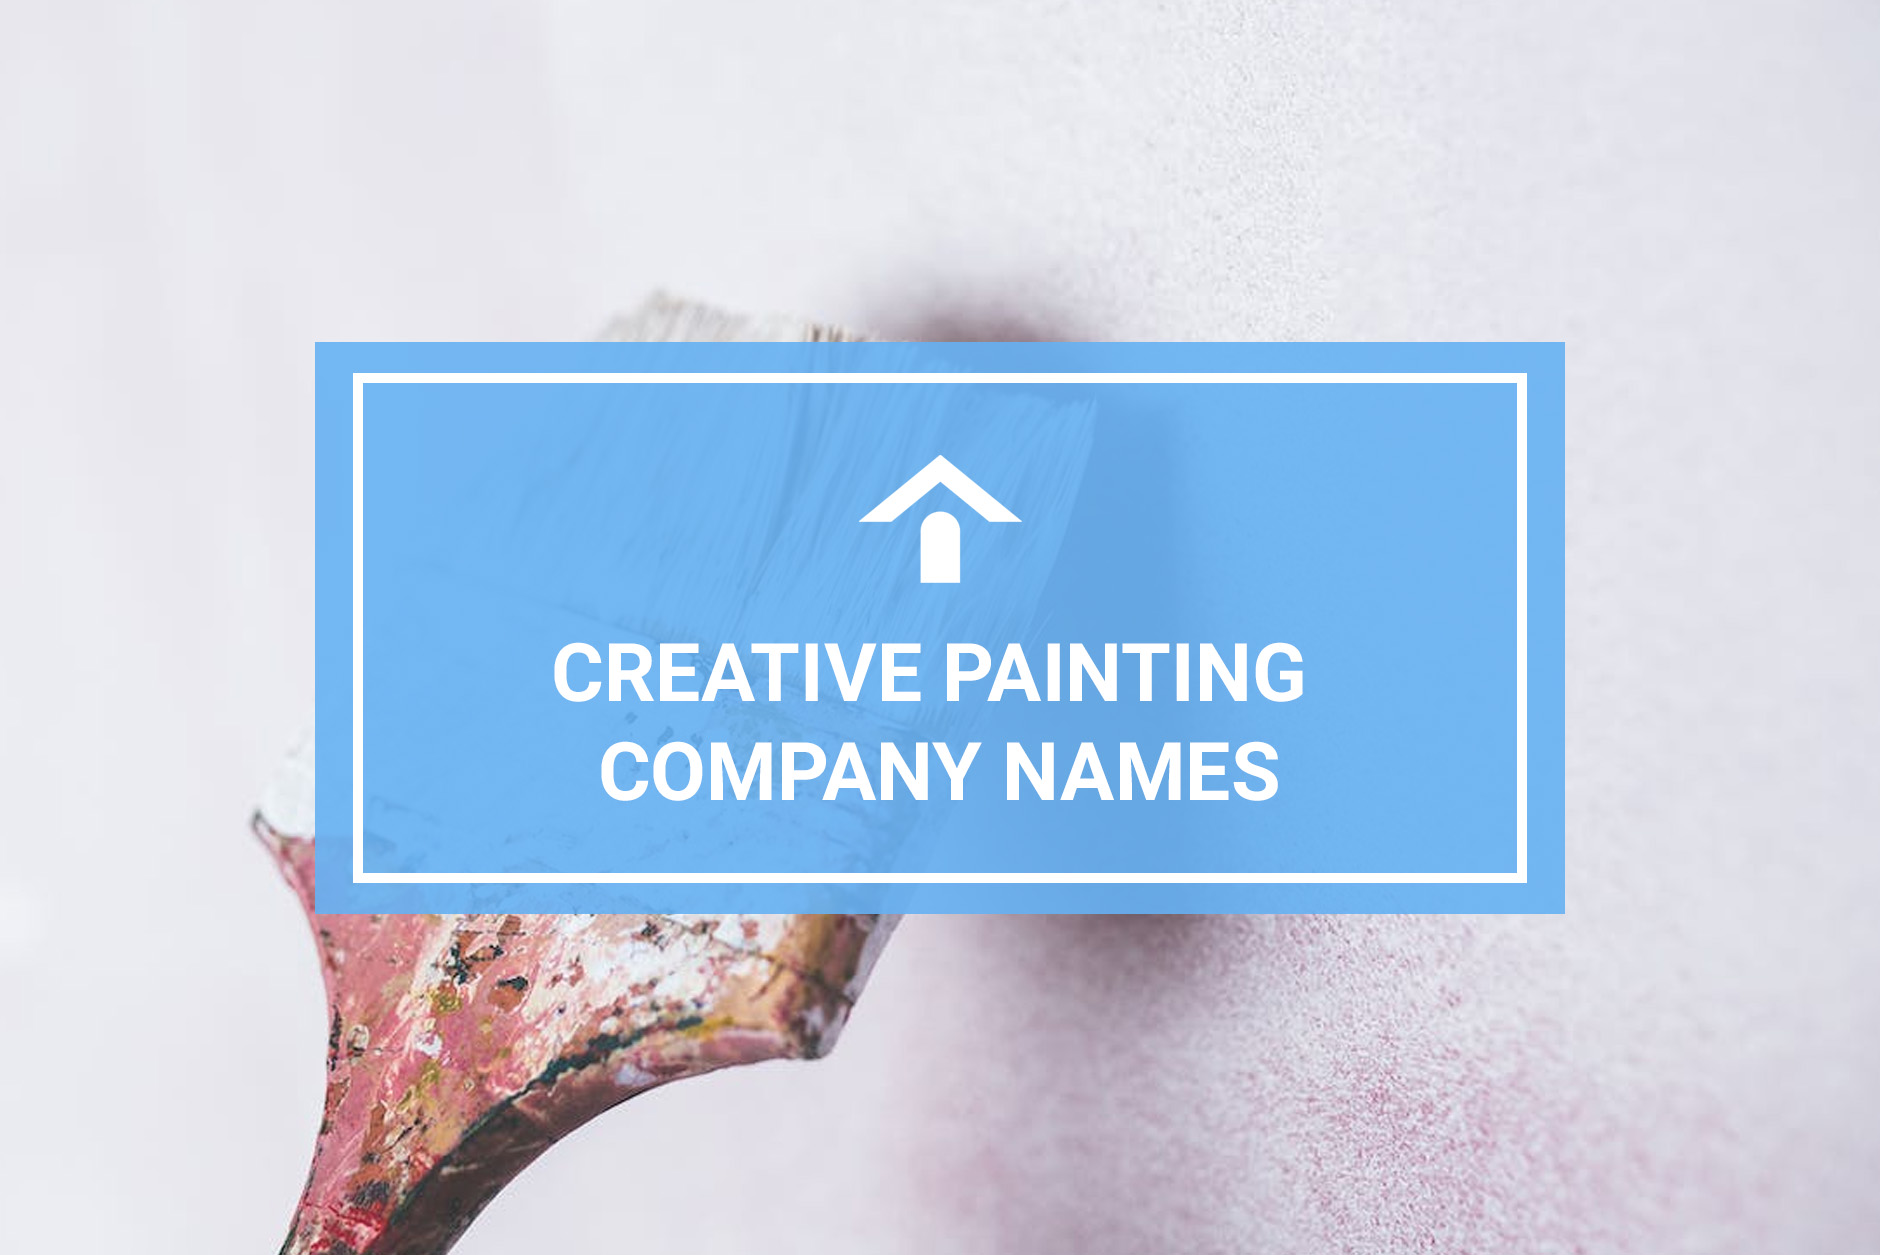 Creative Painting Company Names